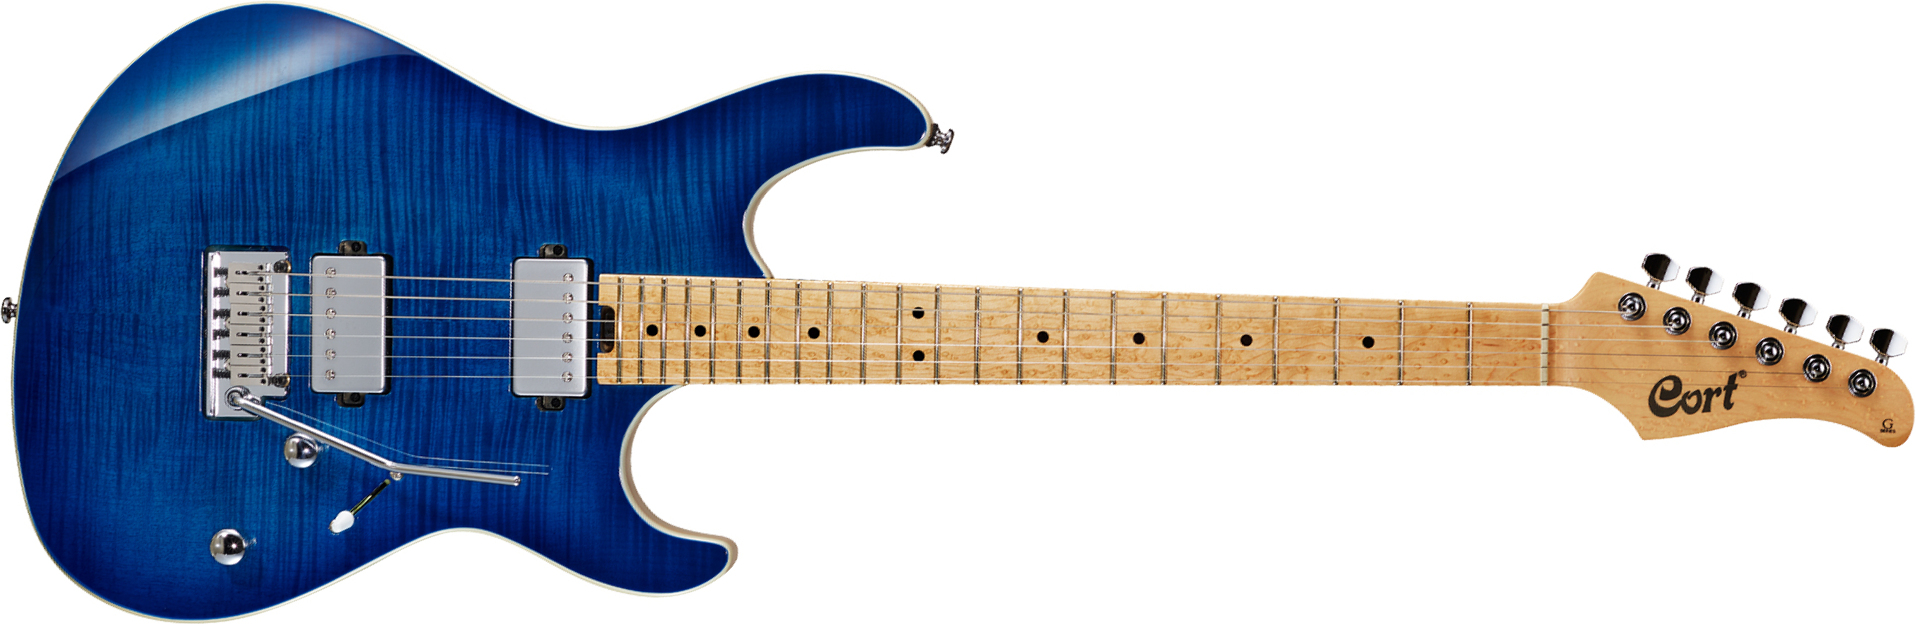 Cort G290 Fat Bbb Hh Trem Mn - Blue Burst - Str shape electric guitar - Main picture